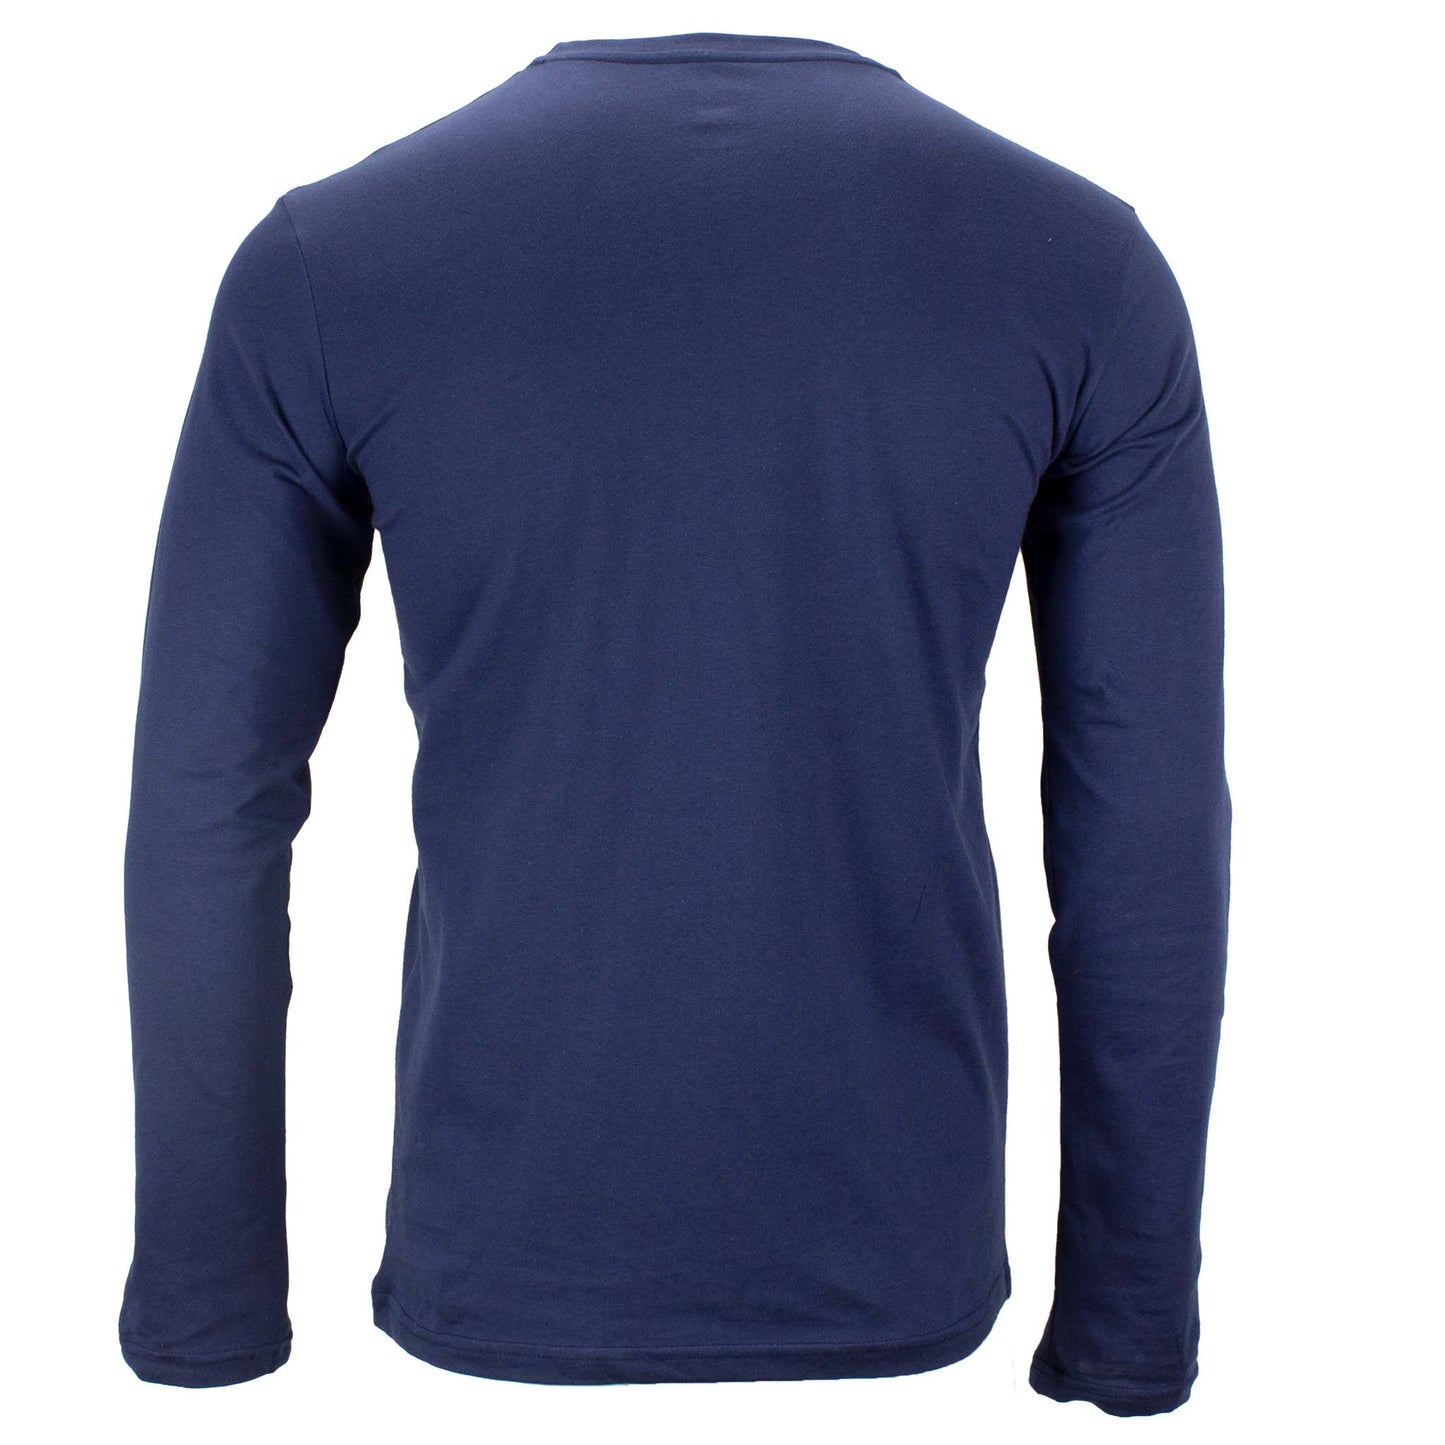 Fanatics NFL Seattle Seahawks Herren langarm T-Shirt blau 1568MNVY1ADSSE-3